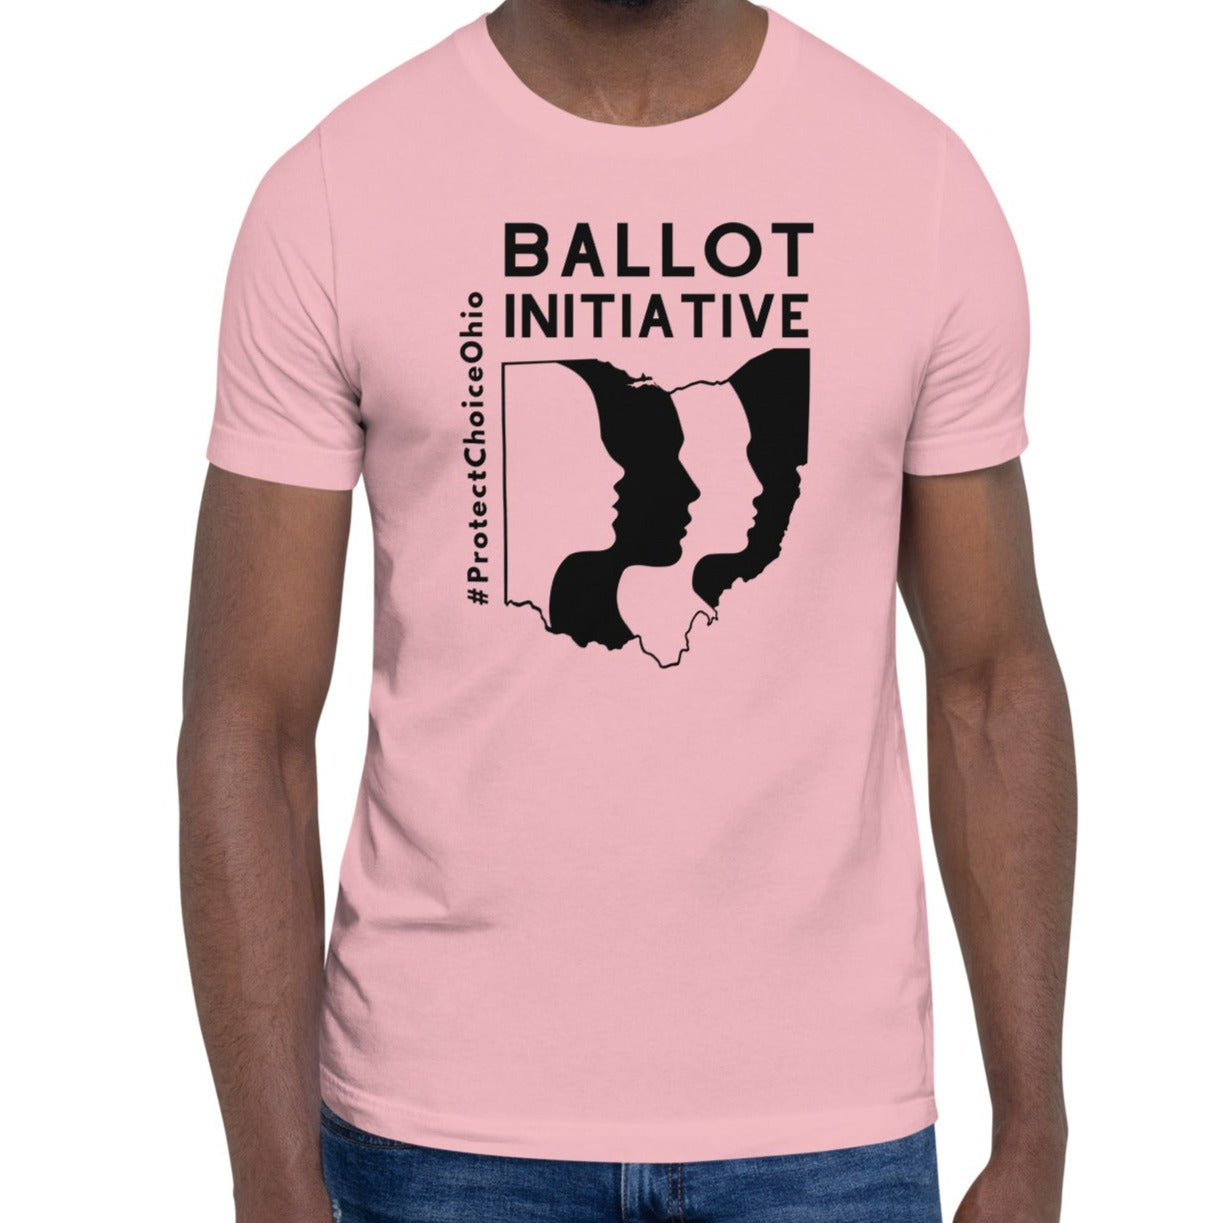 Ballot Initiative - Unisex t-shirt - Multiple Colors